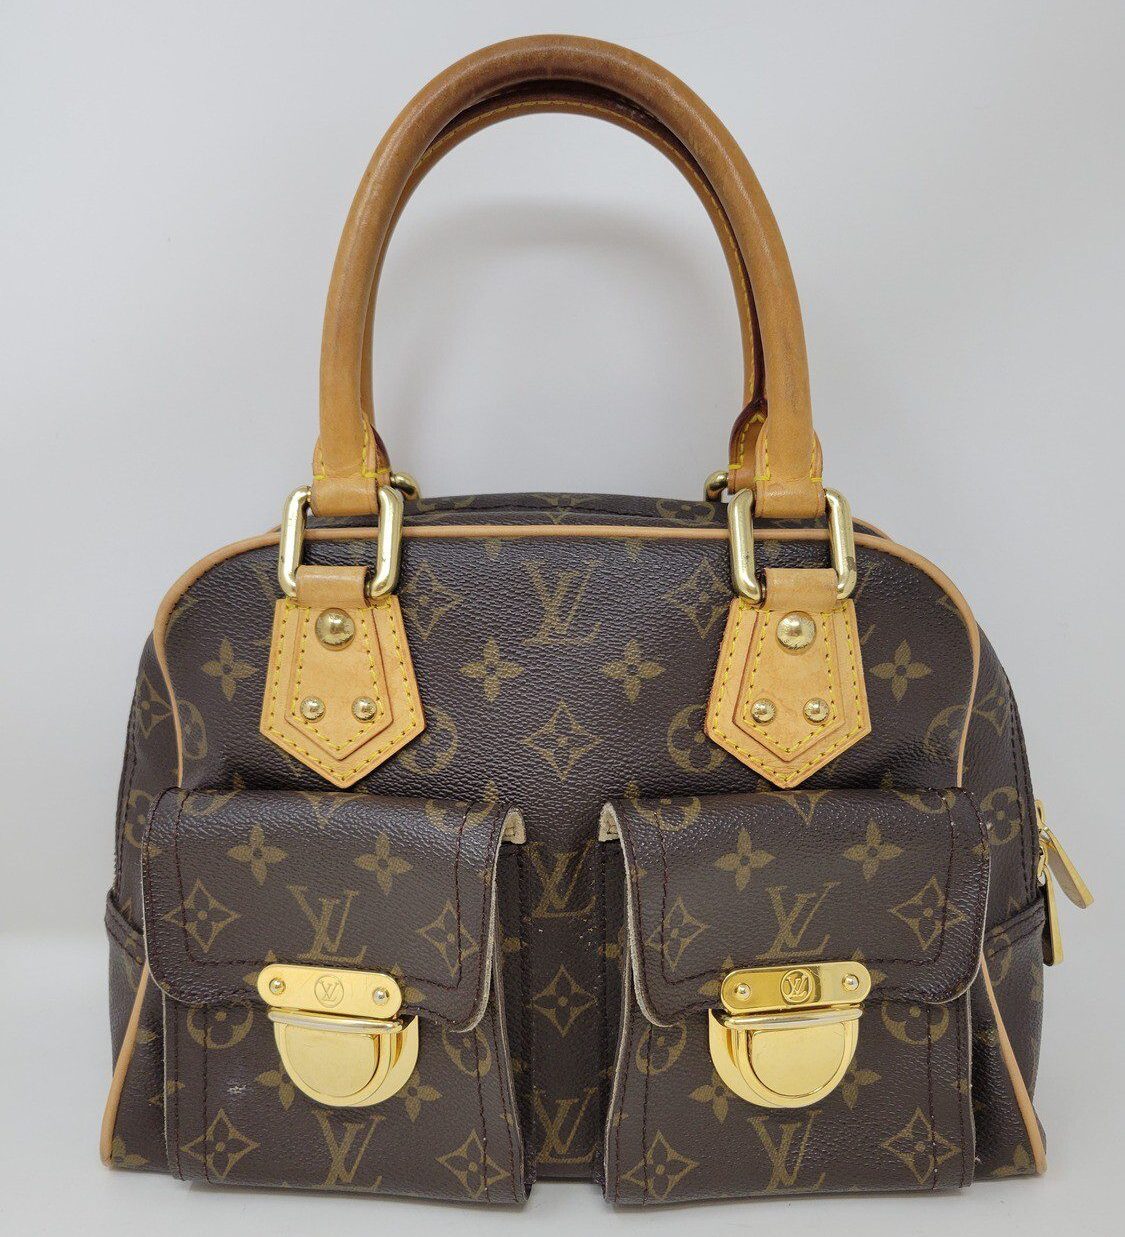 North Dallas resale shop puts Louis Vuitton handbags within reach